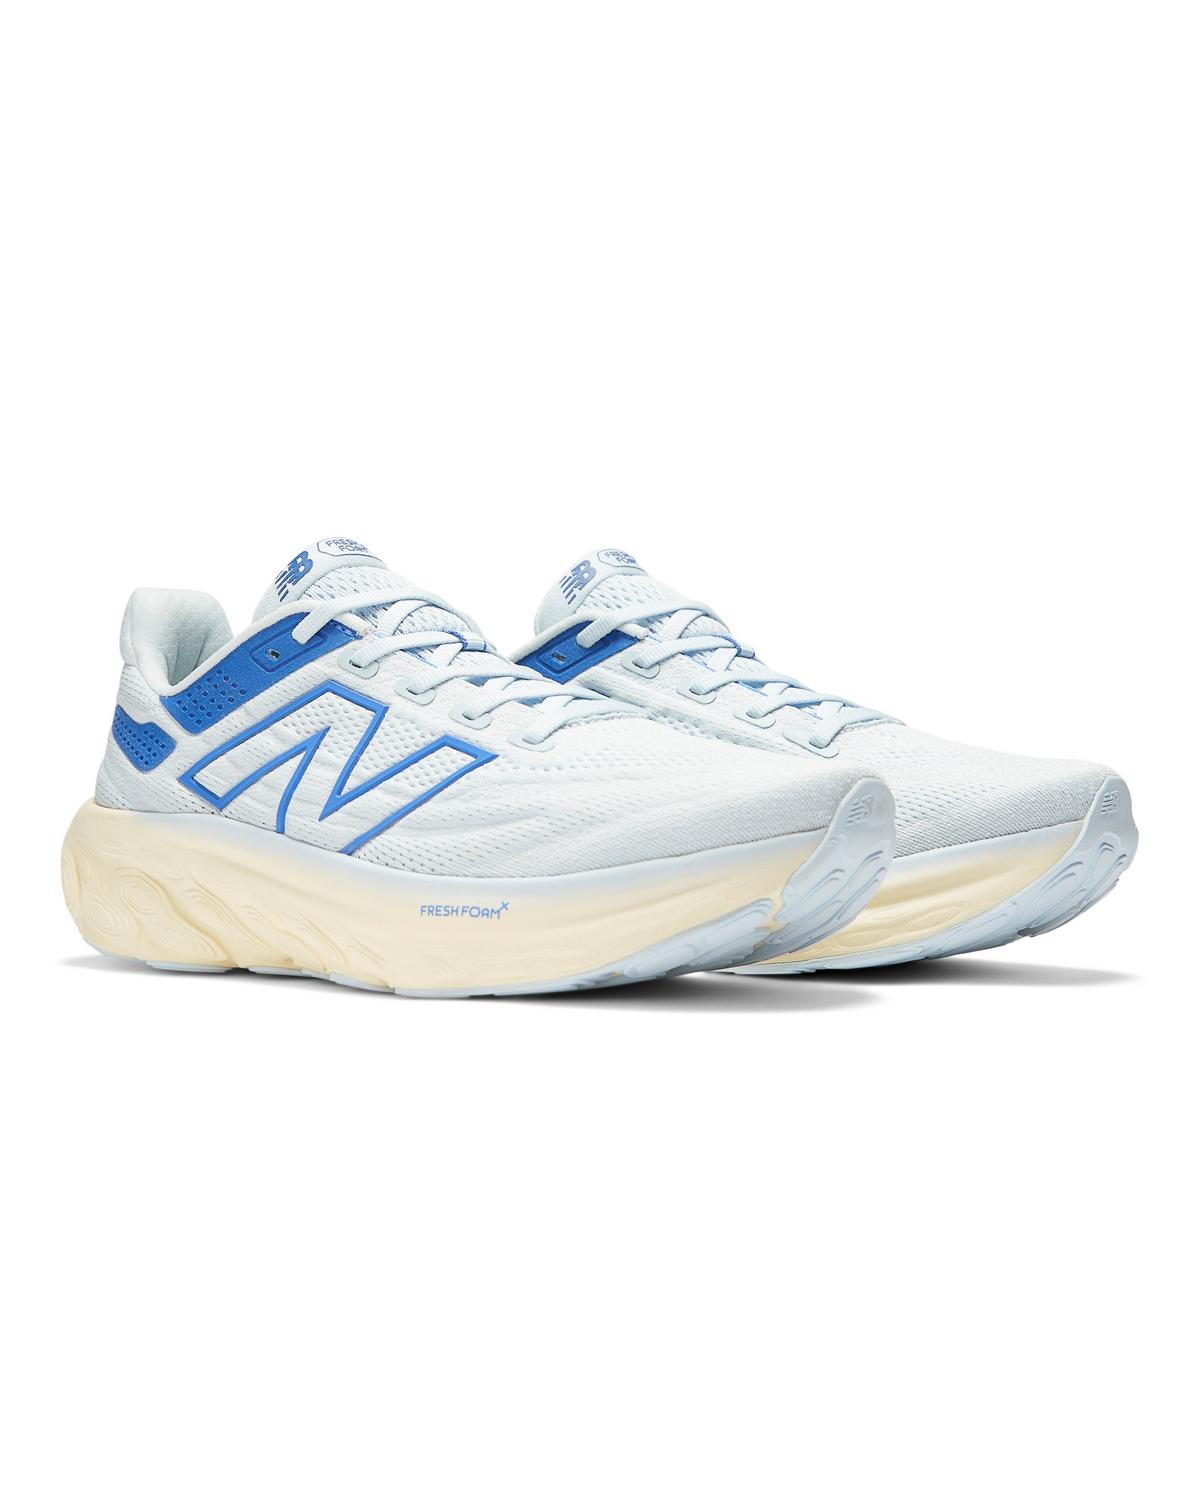 New Balance Women’s Fresh Foam X 1080 v13 Road Running Shoes -  Light Blue